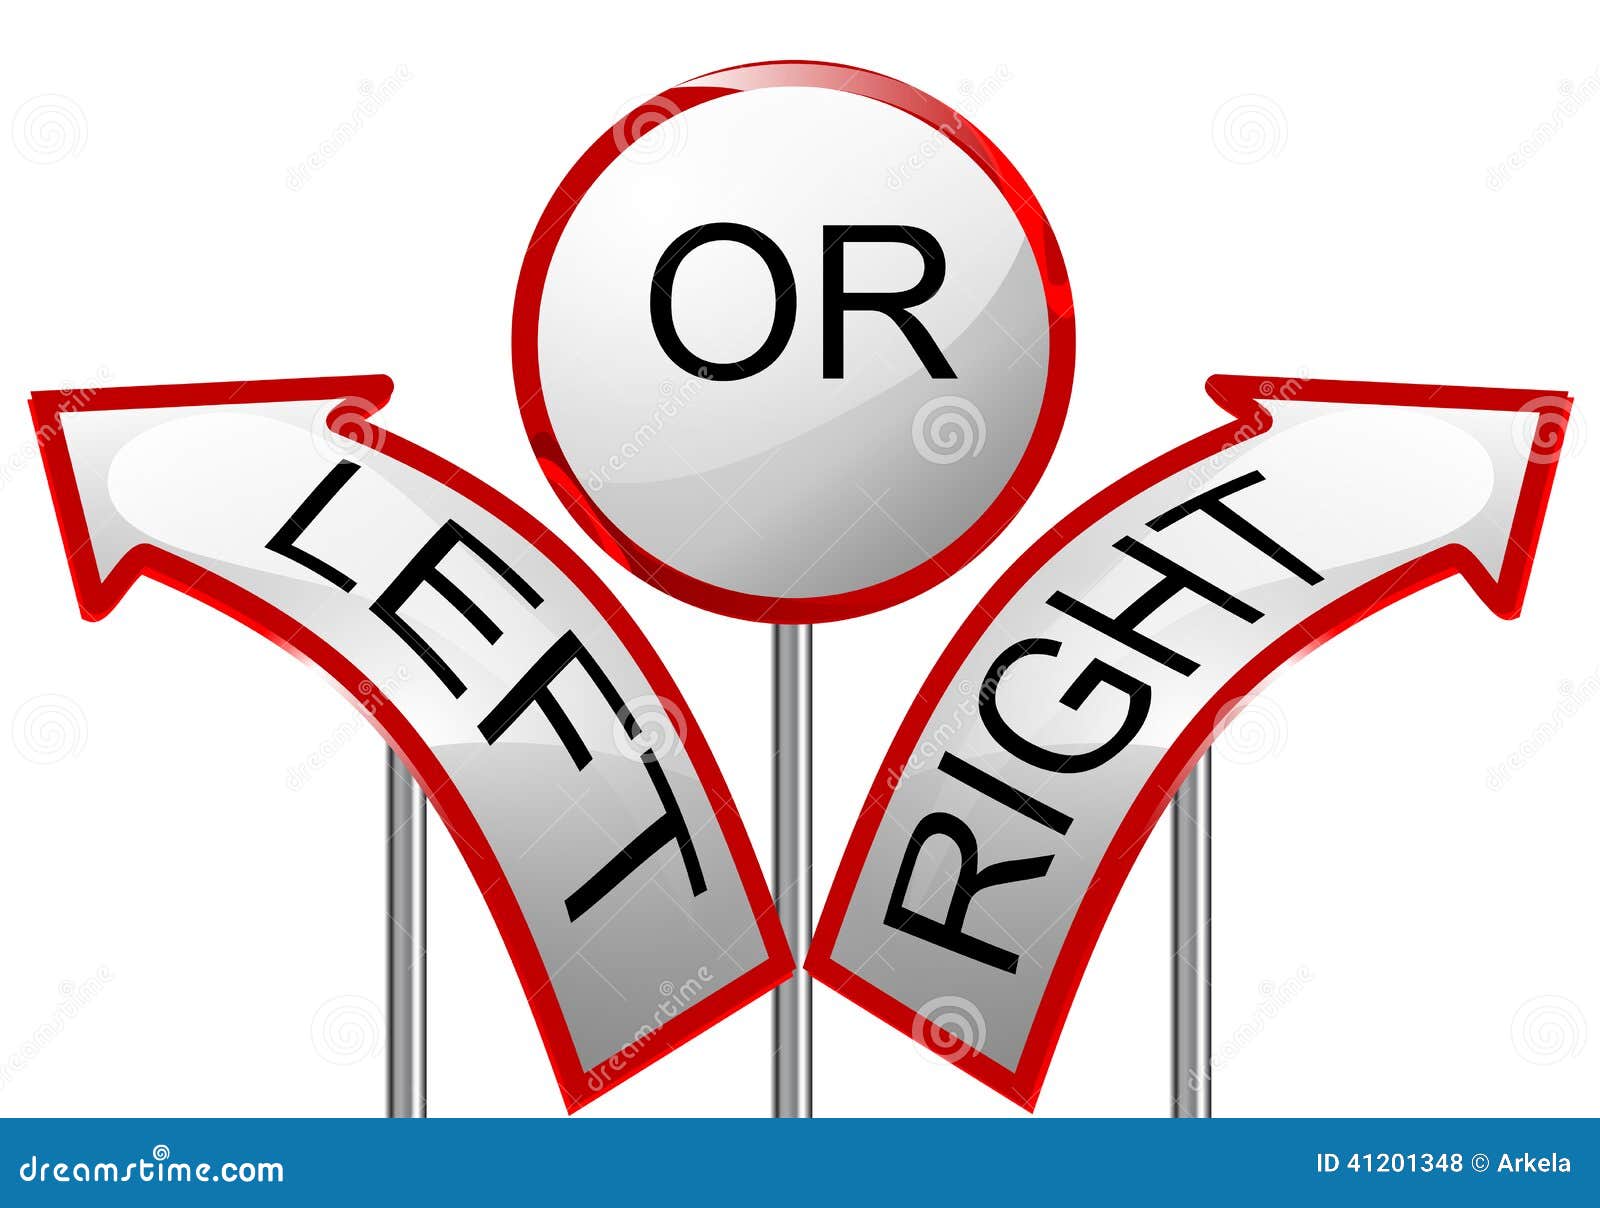 Выбери левый или правый. Лево или право. Картинка on the right. Left or right. Выбор лево право.